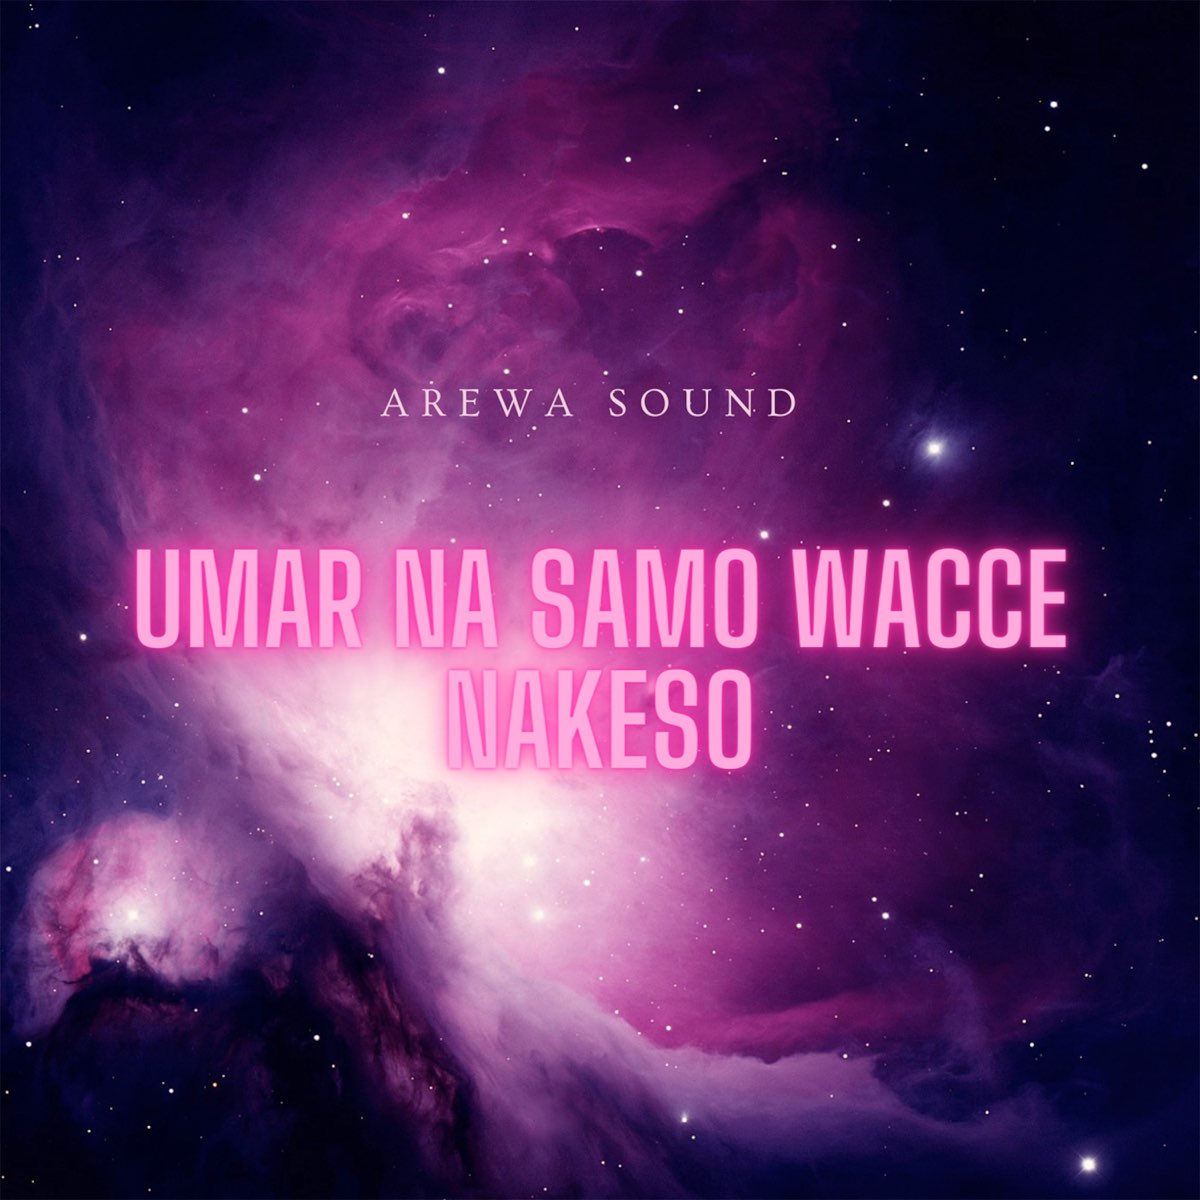 Umar Nasamo Wacce Nakeso - Single by Arewa Sound on Apple Music